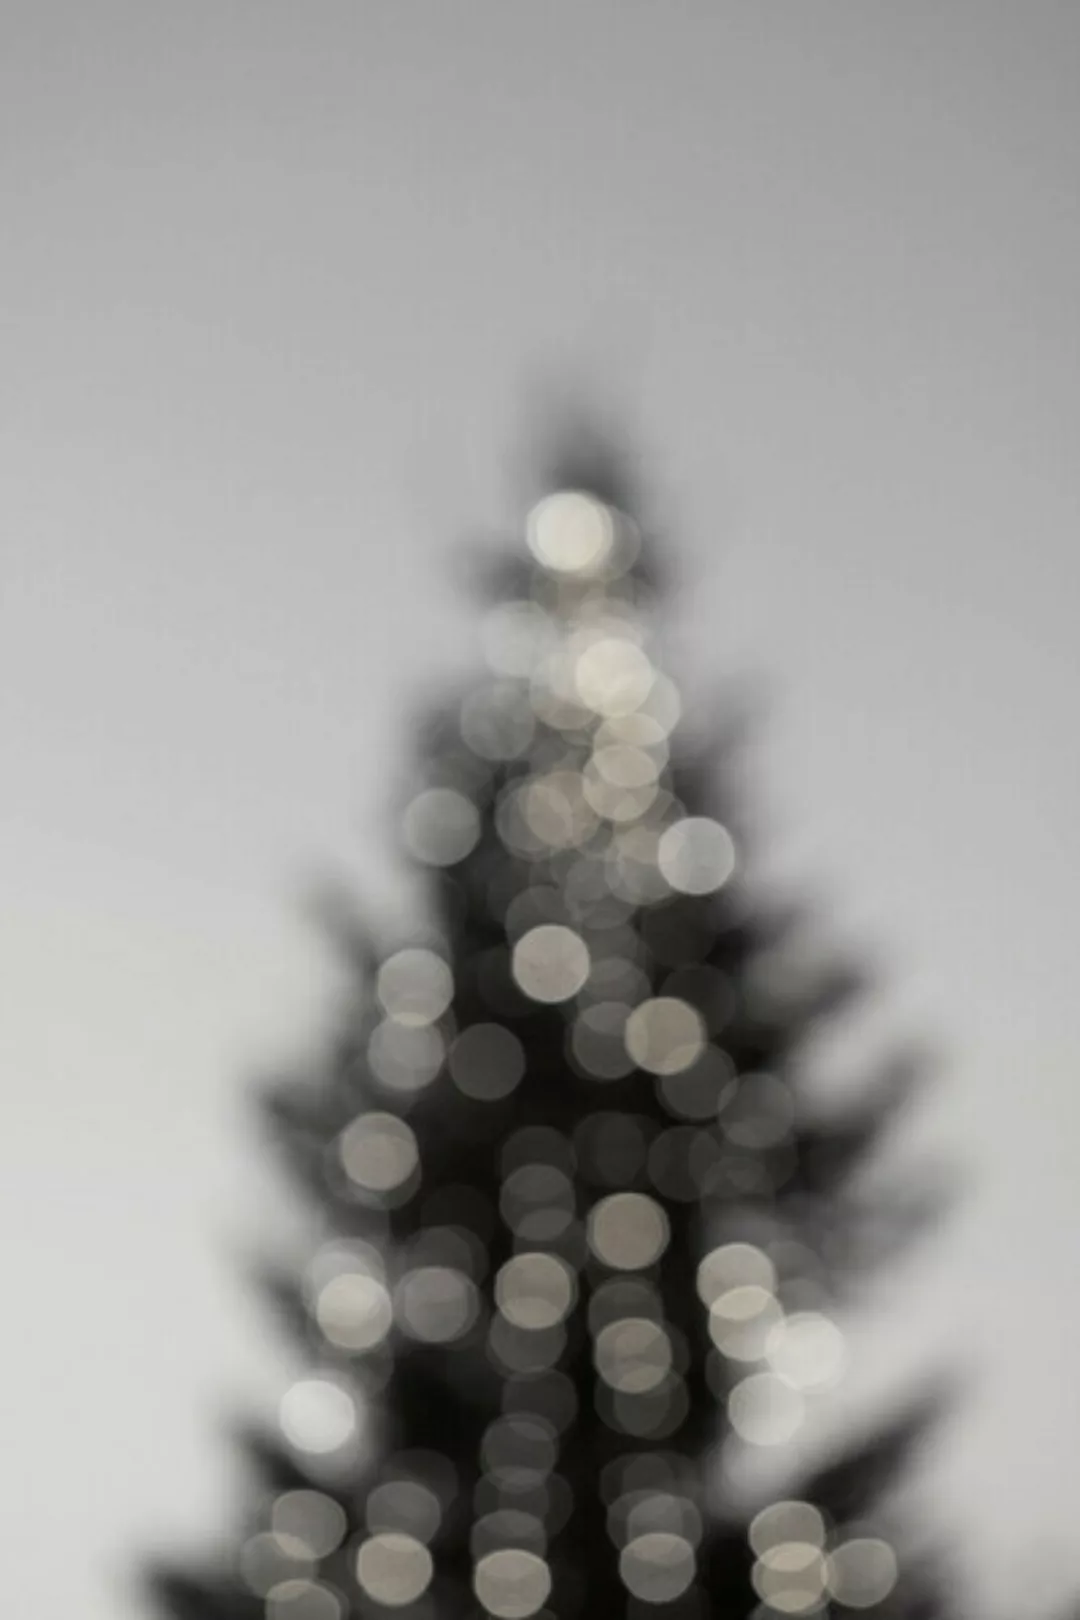 Poster / Leinwandbild - Merry Merry Christmas - Black & White Edition günstig online kaufen